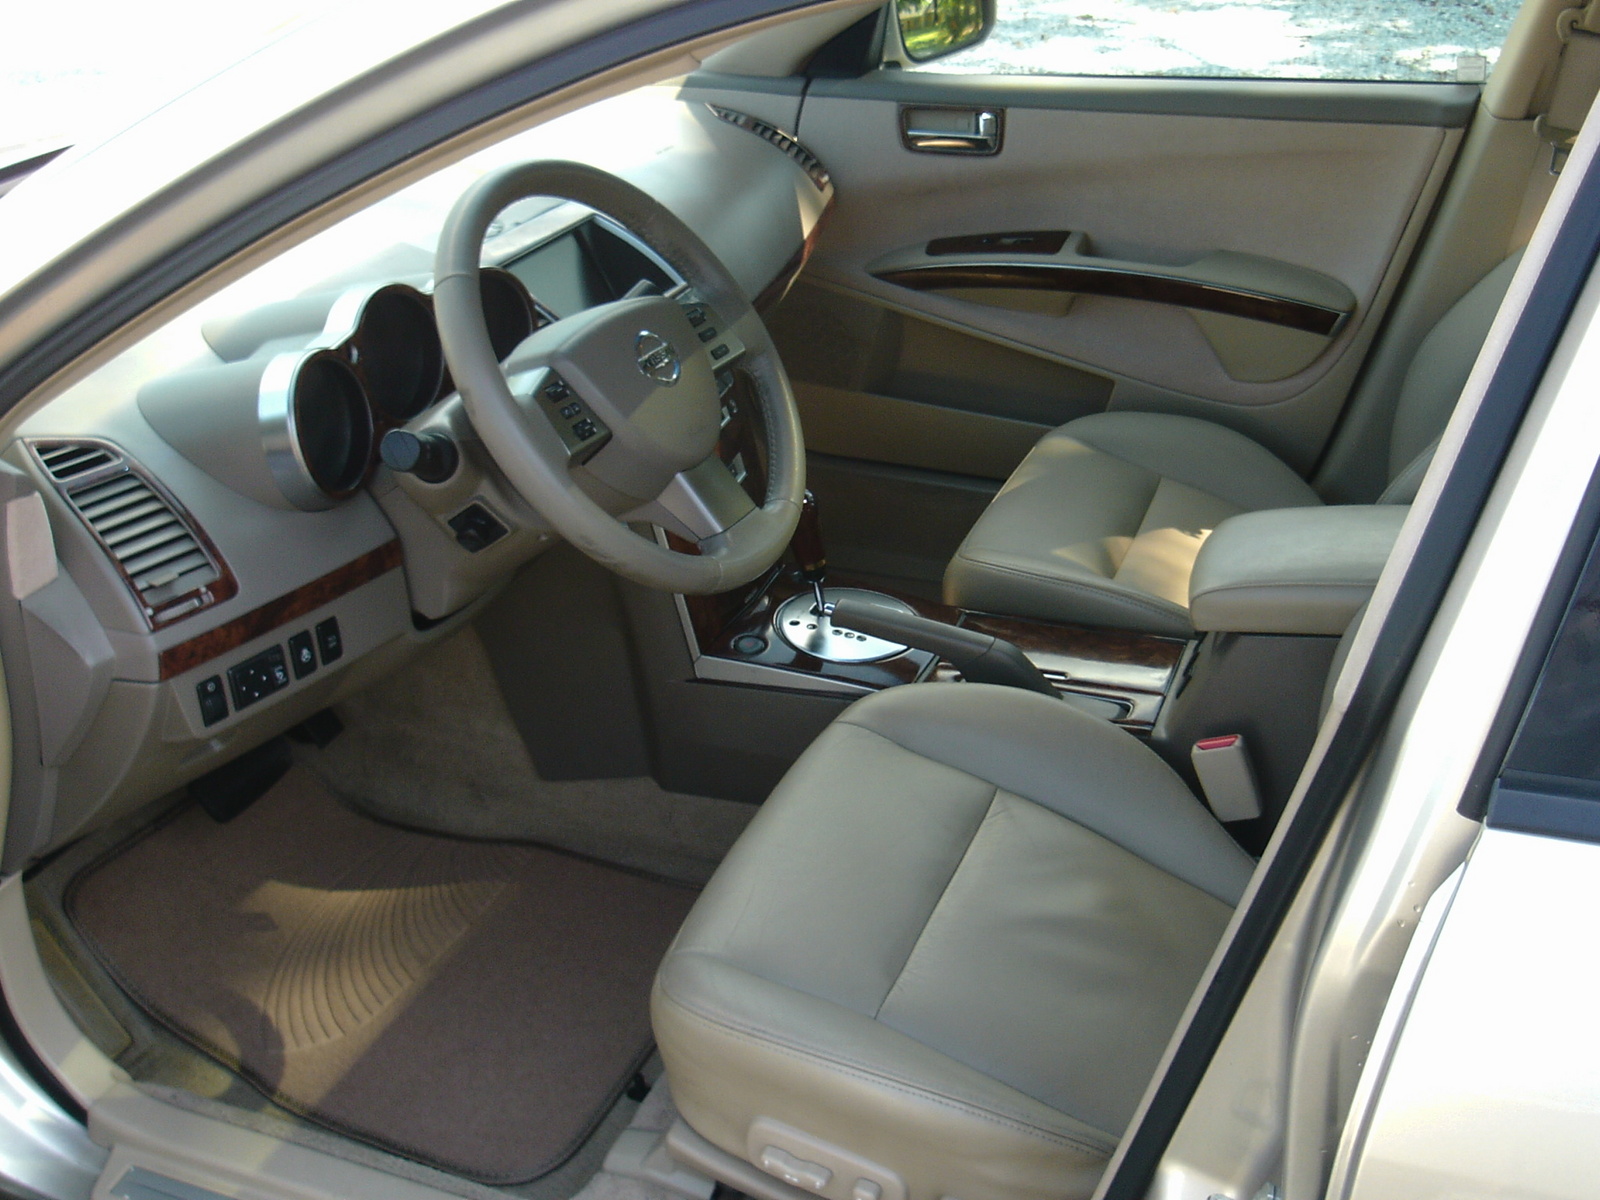 2006 Nissan maxima se interior